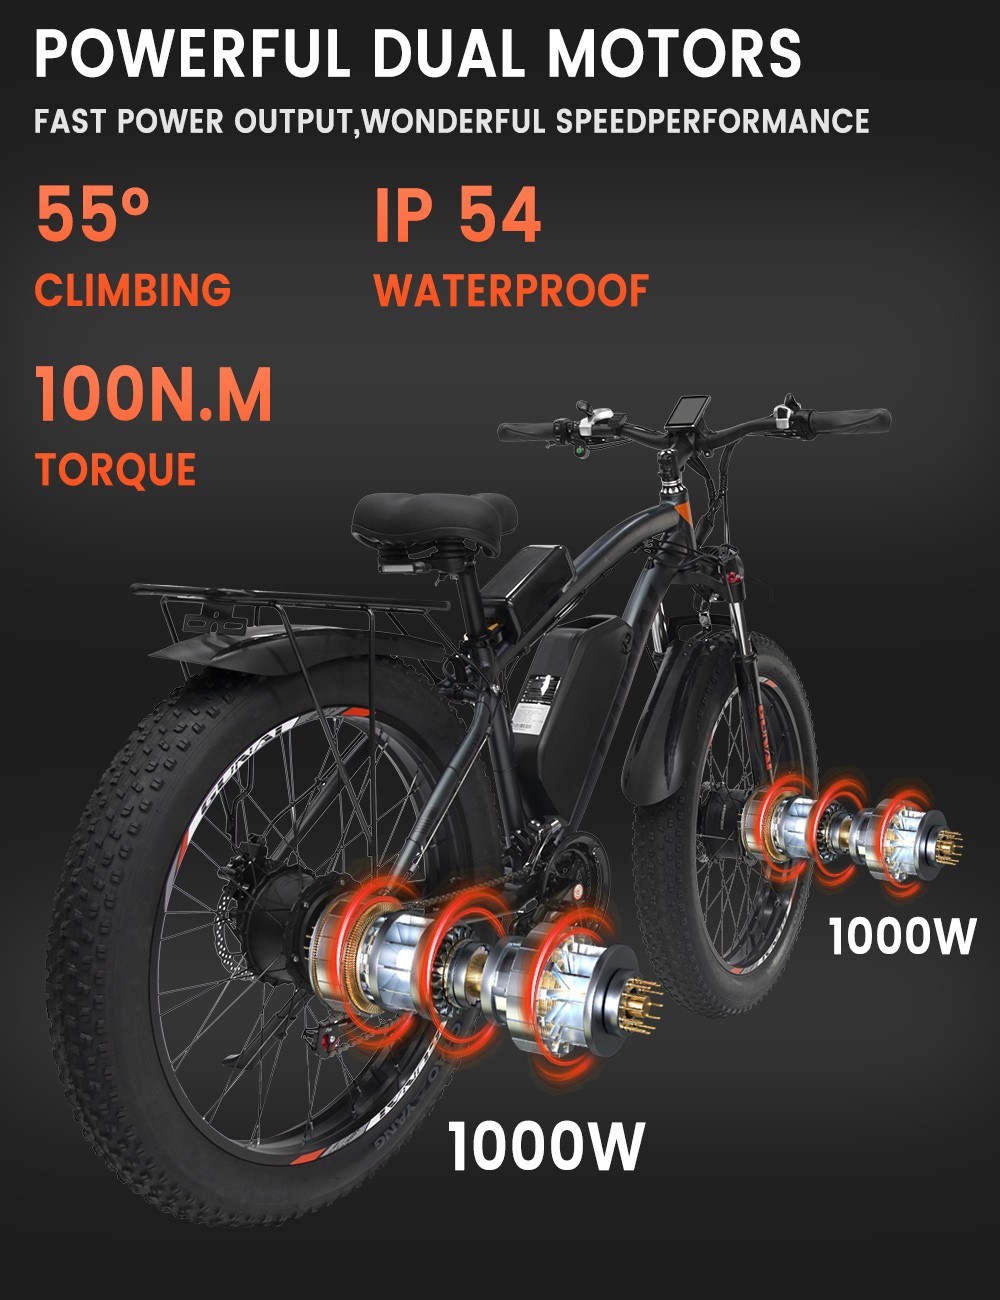 Bicicleta electrica GUNAI GN88 26 inch 2*1000W Motoare 48V 22Ah 55km/h Viteza